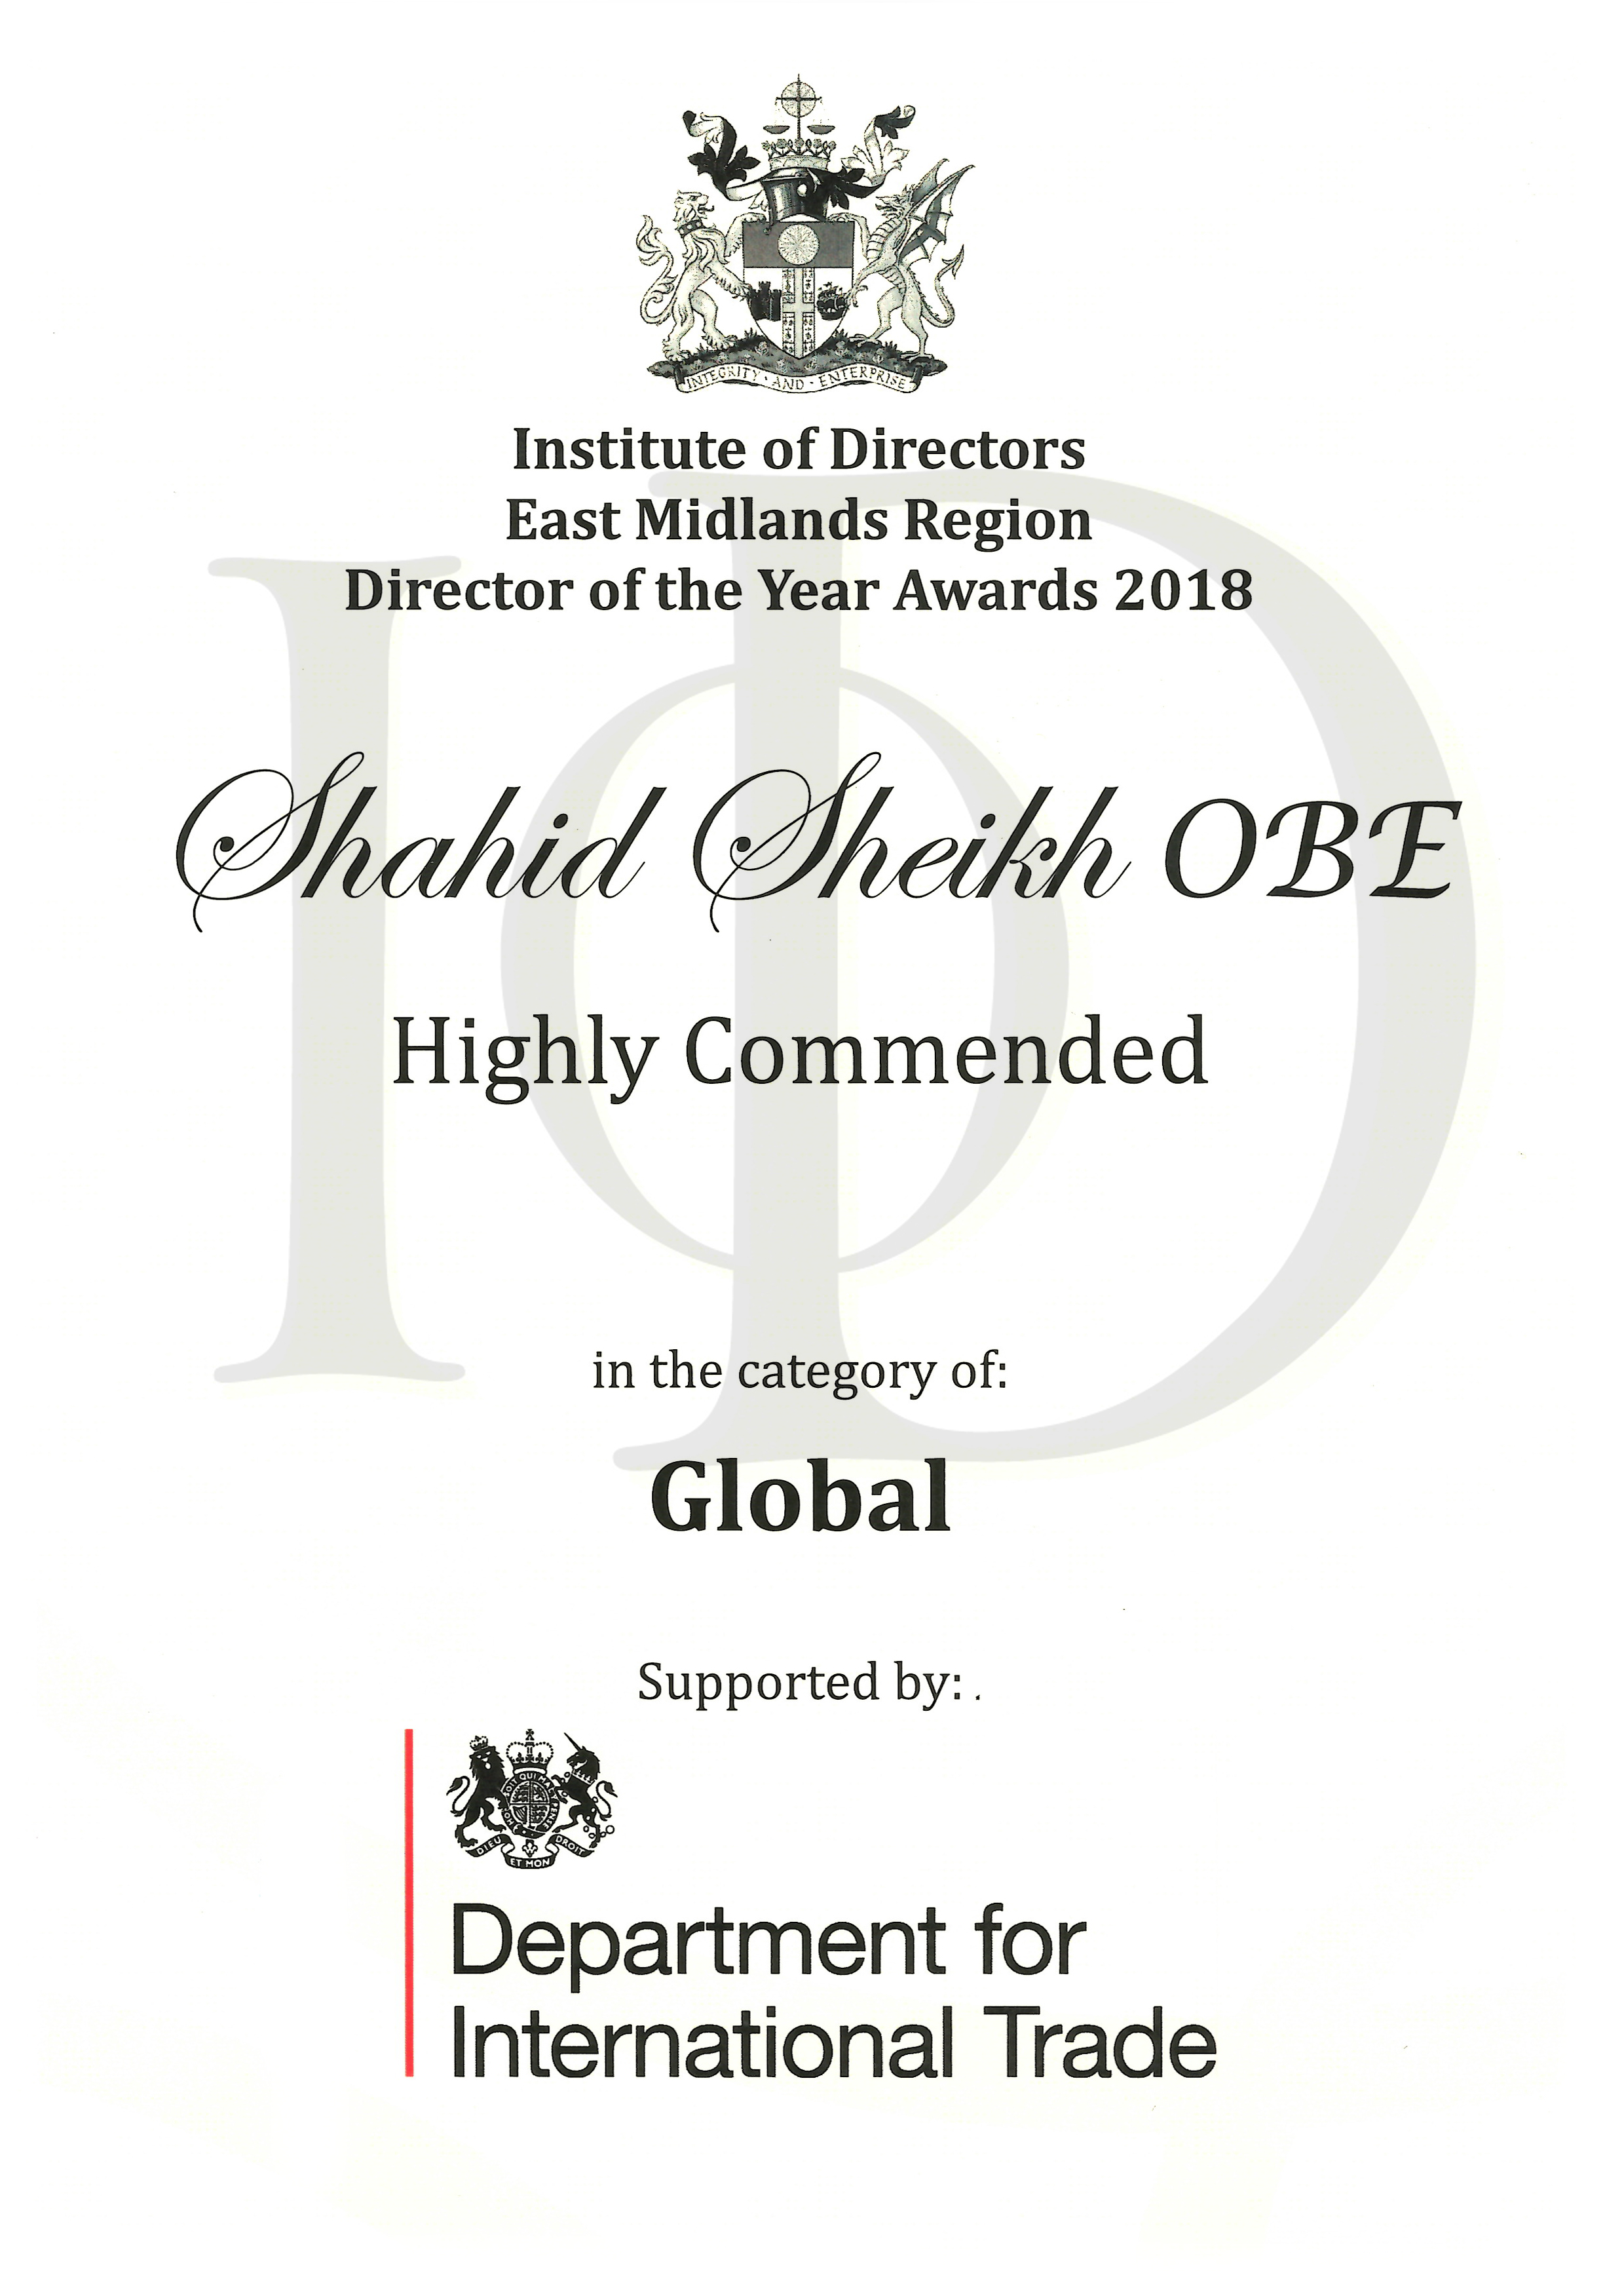 Iod Global, Director of the Year Awards 2018 Winner Shahid Sheikh OBE